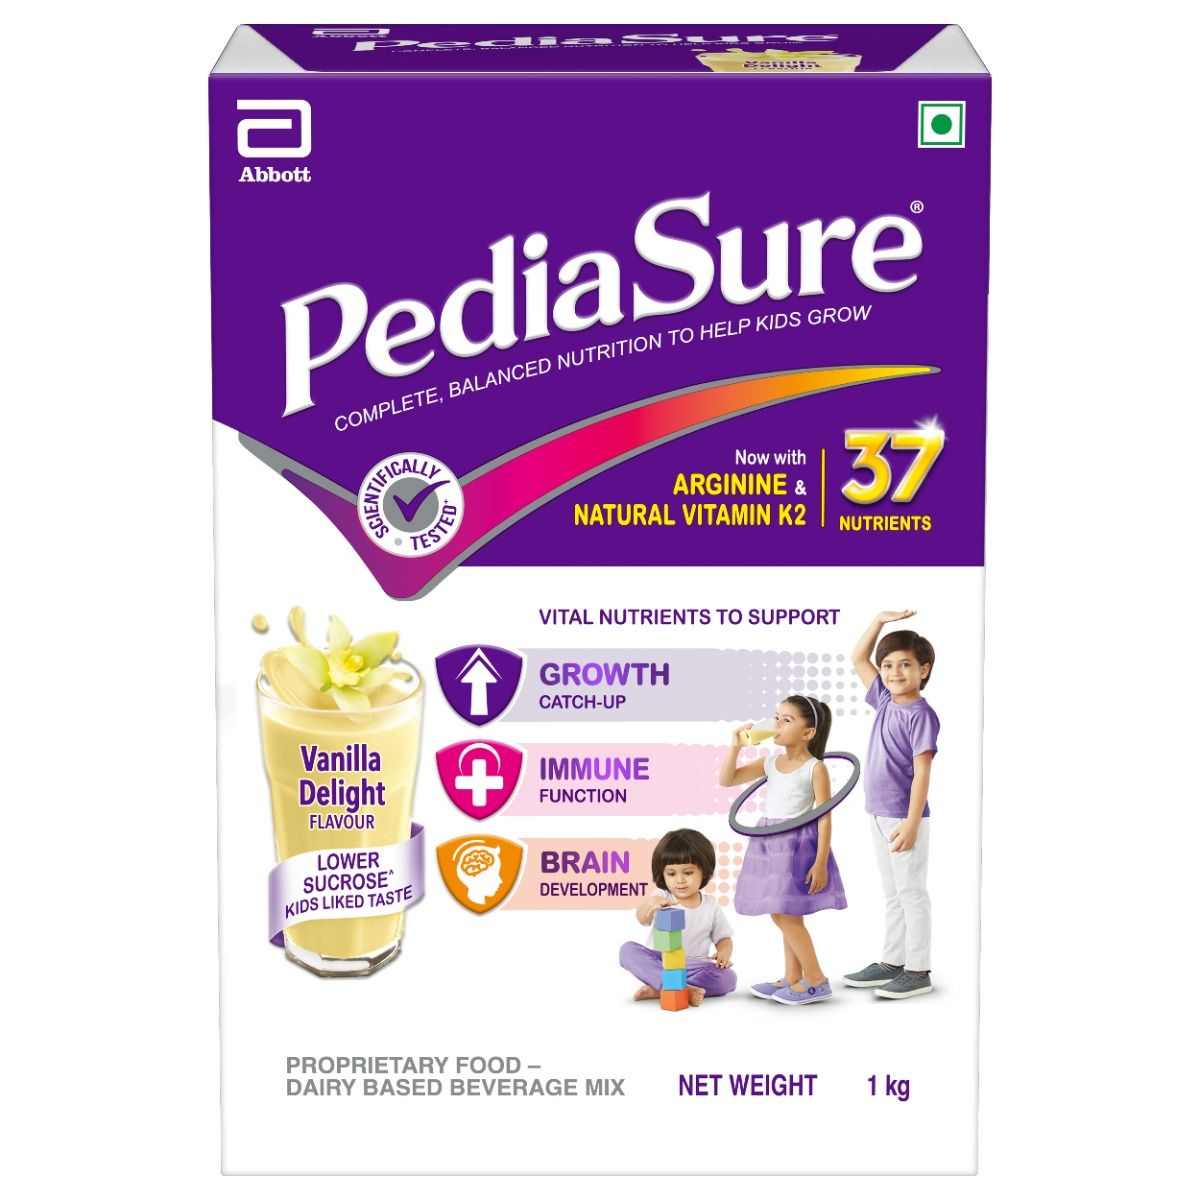 Buy Pediasure Complete, Balanced Nutrition Vanilla Delight Flavour Nutrition Drink Powder for Kids Growth, 1 kg Online